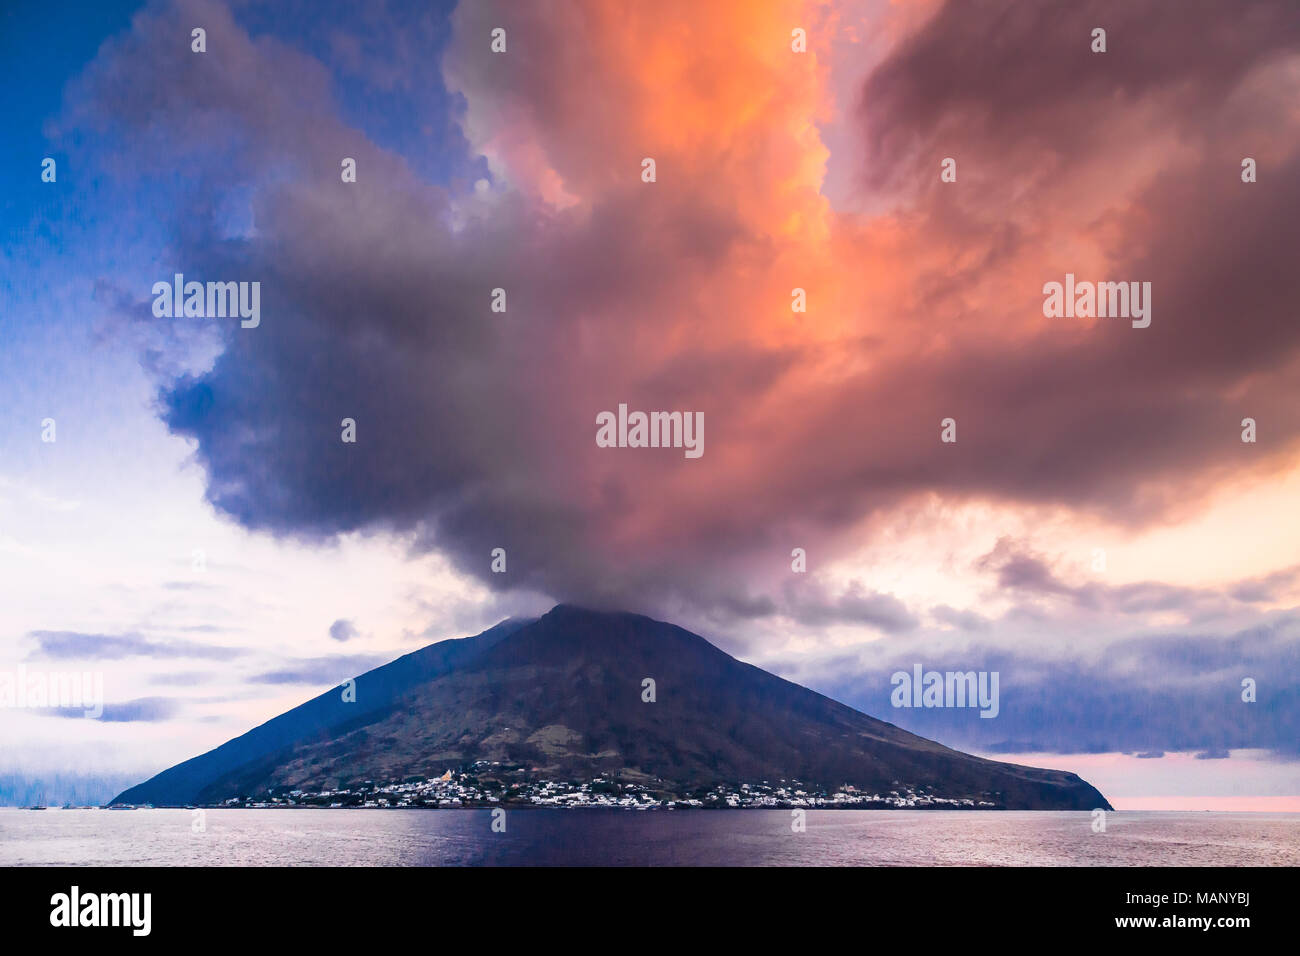 El volcán Stromboli pertenece al archipiélago de las islas Eolias. Foto de stock